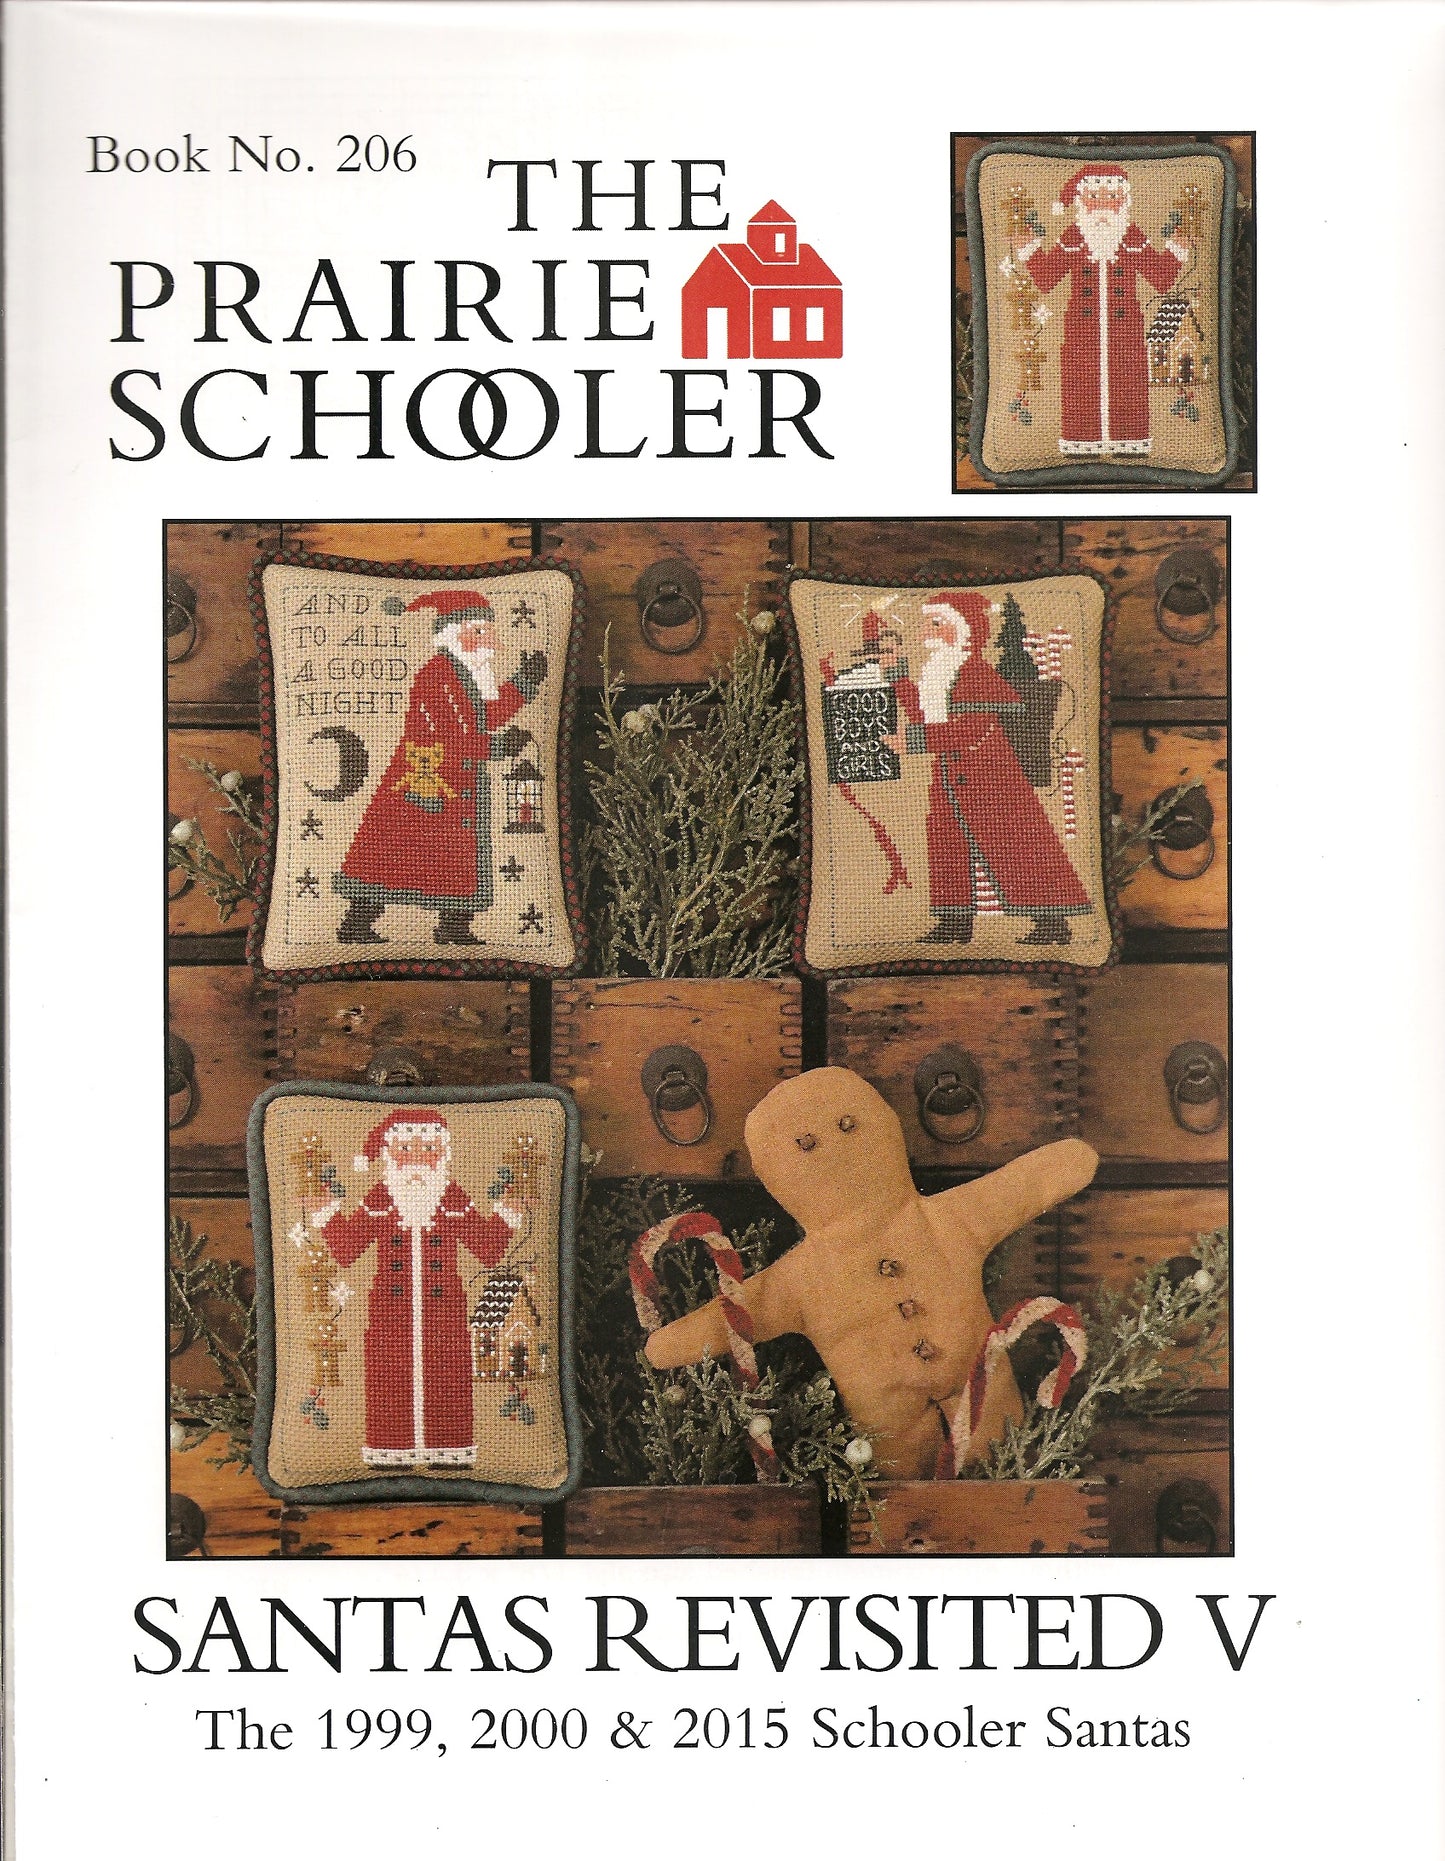 Prairie Schooler Santas revisited V 1999 2000 2015 Christmas cross stitch pattern